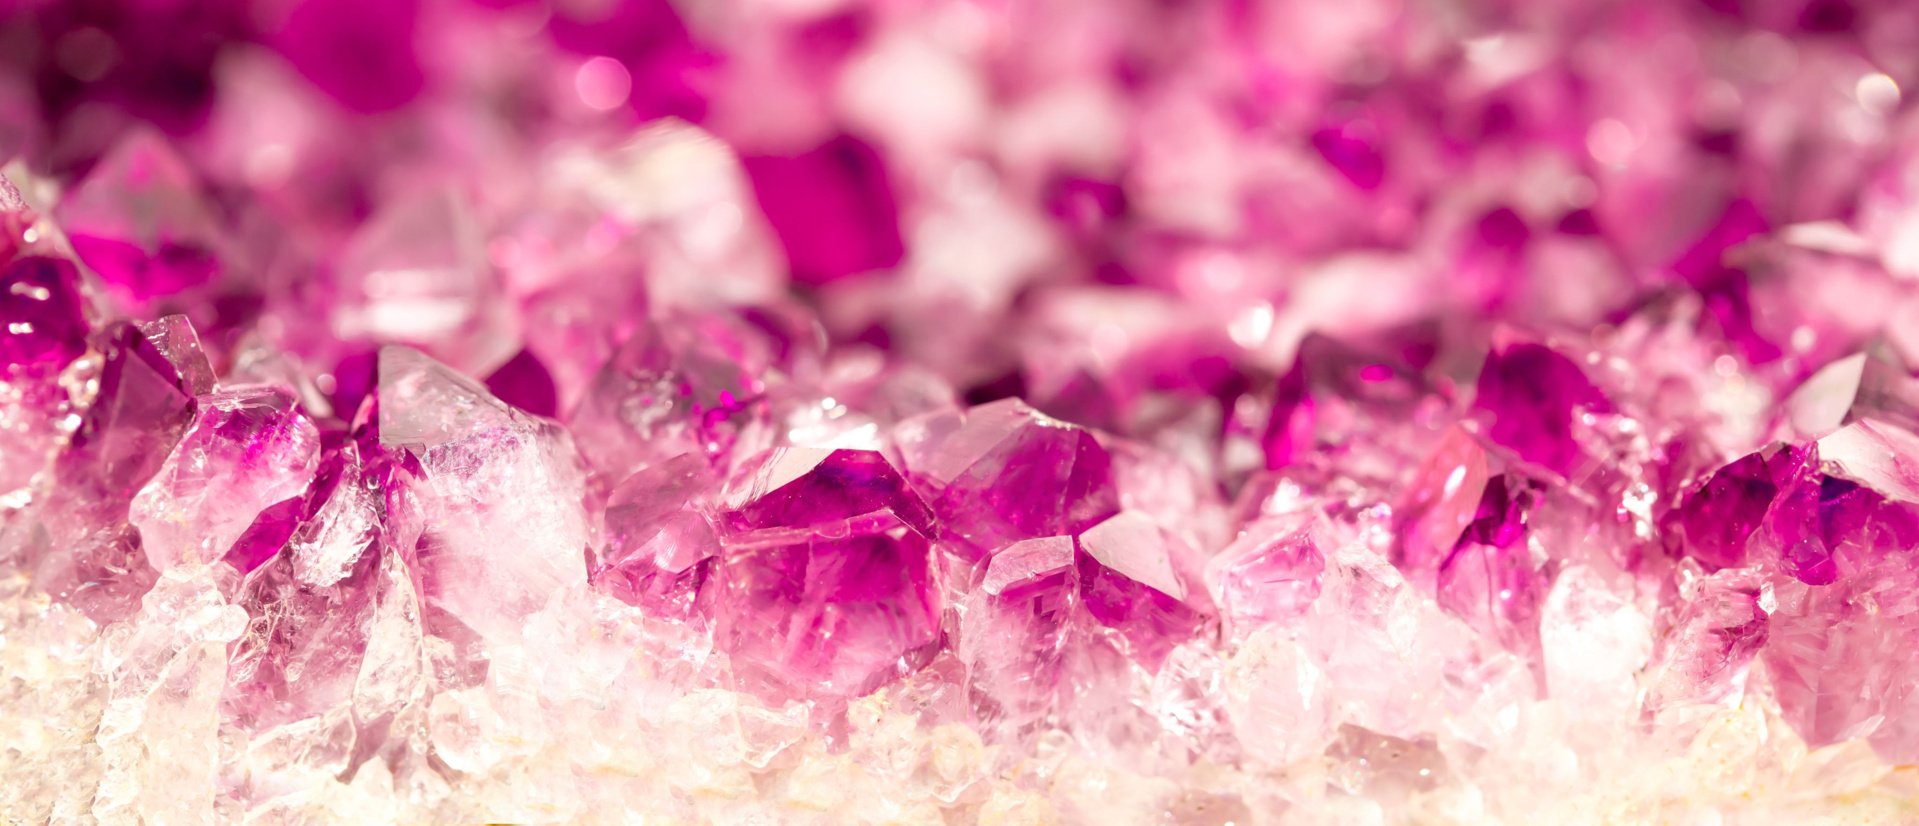 Image of Pink Gemstones Just As Beautiful As Pink Diamonds